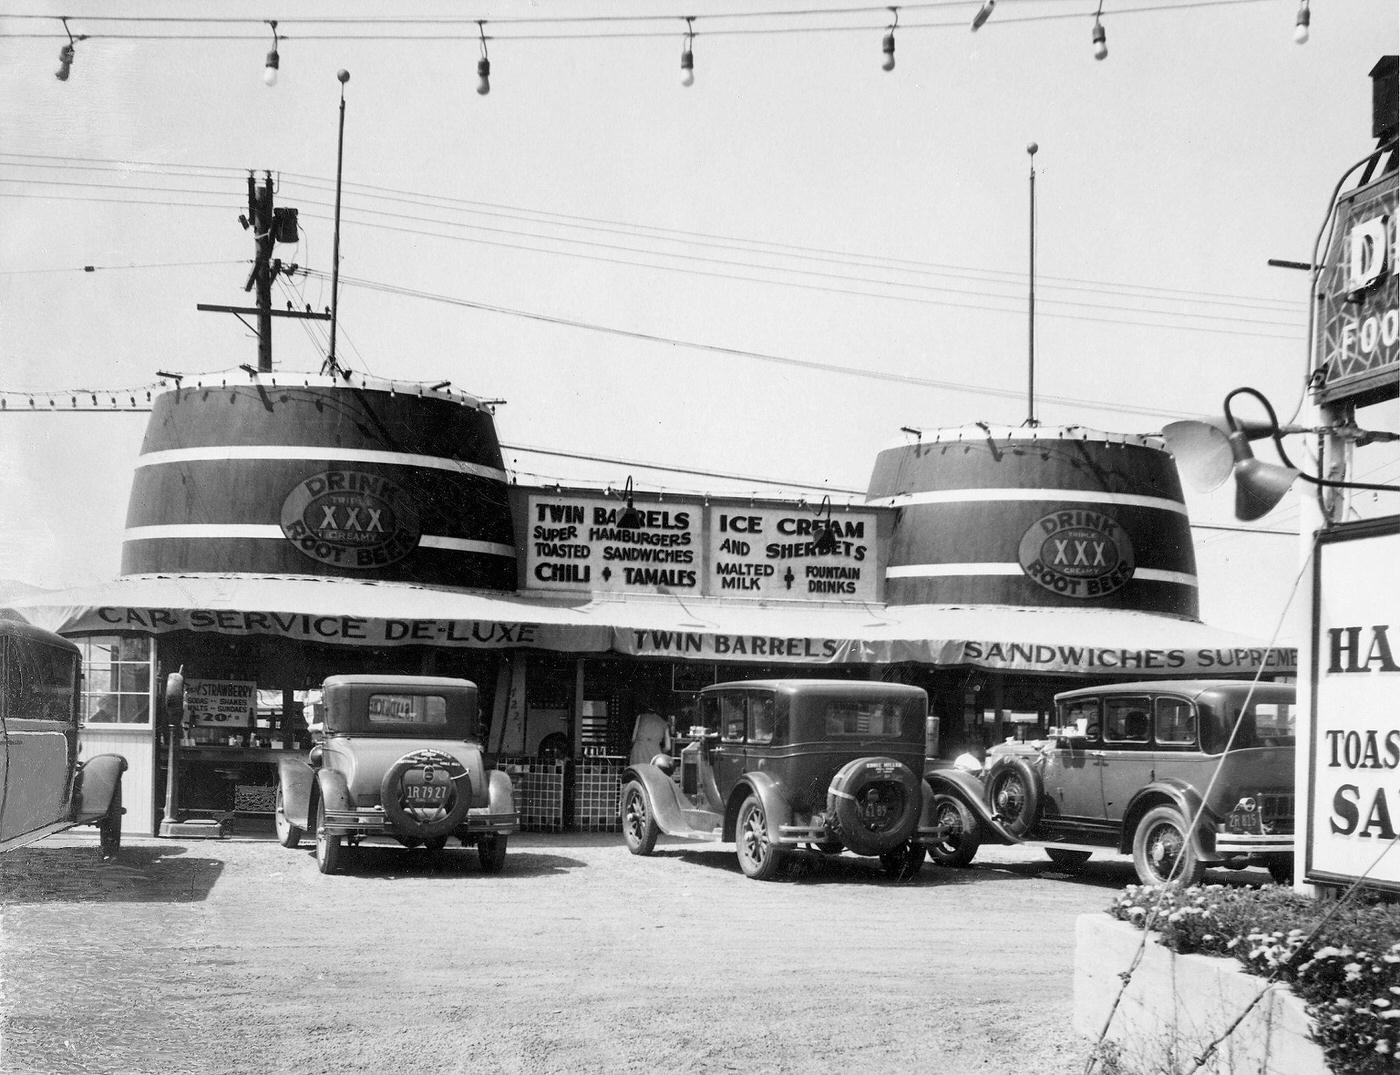 The Twin Barrels drive-in restaurant near Los Angeles, 1939.